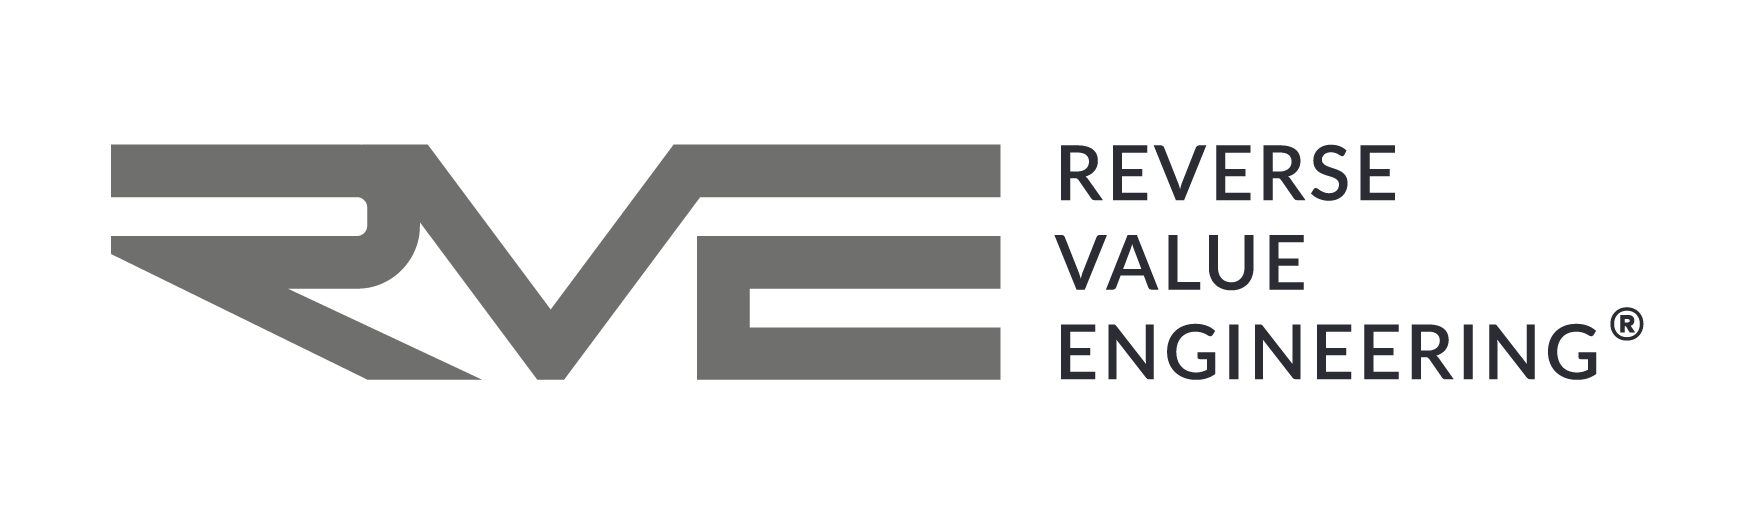 RVE Reverse Value Engineering